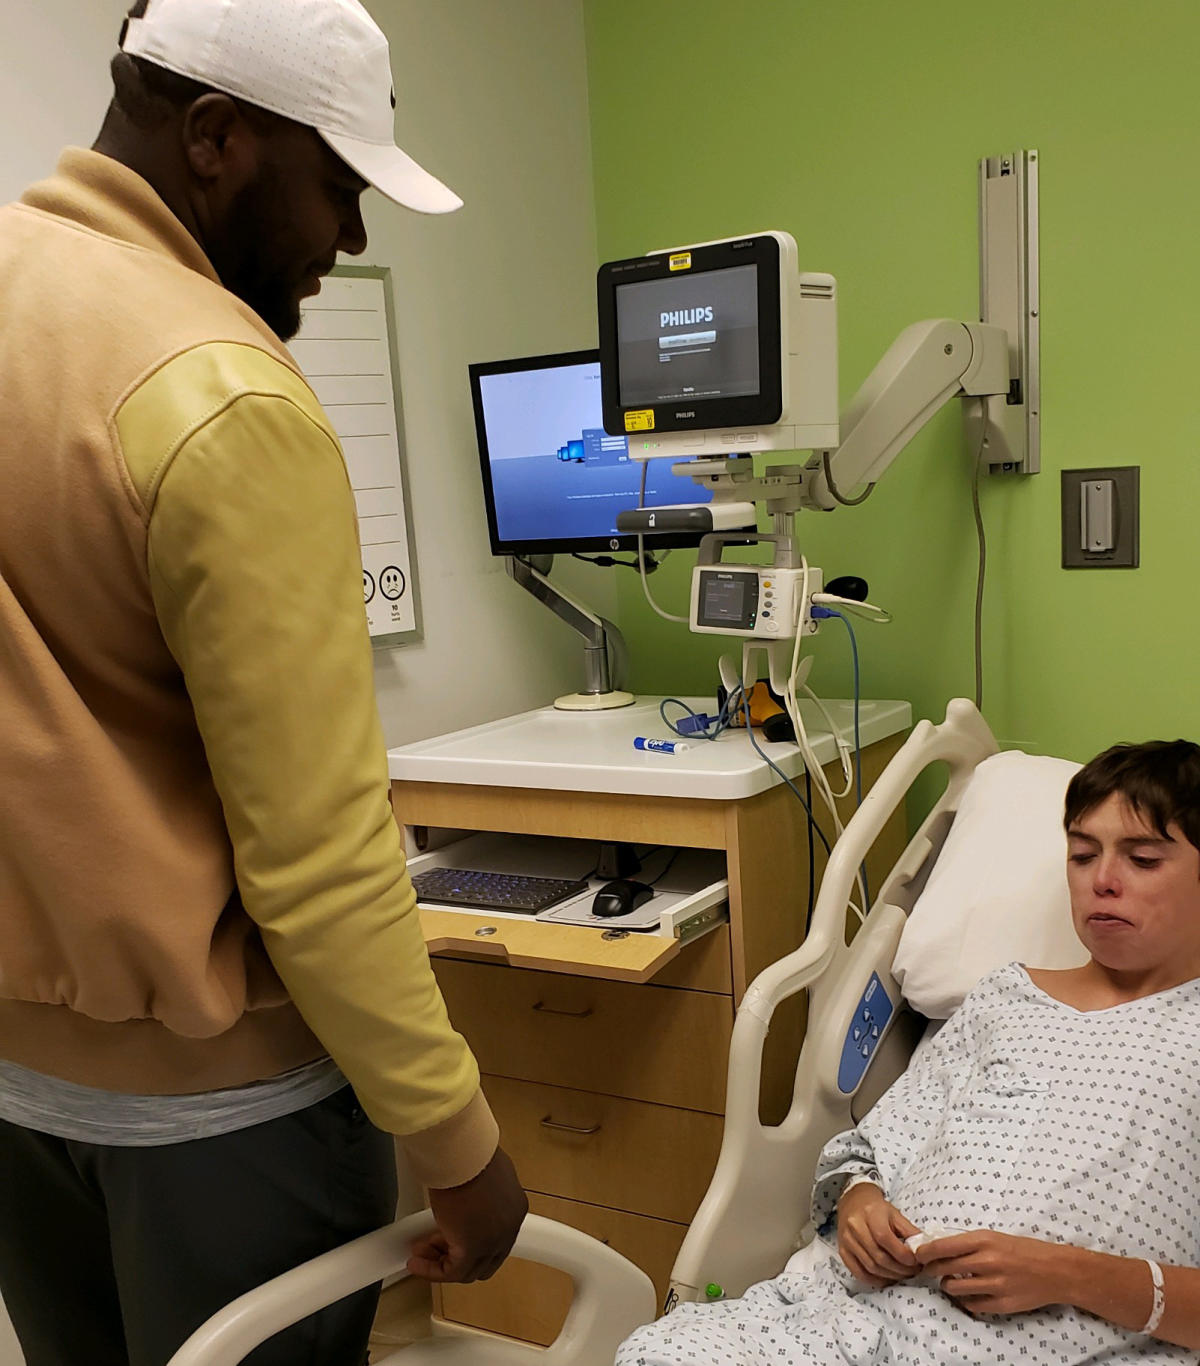 Children's hospital patients make sweet video for injured baseball player